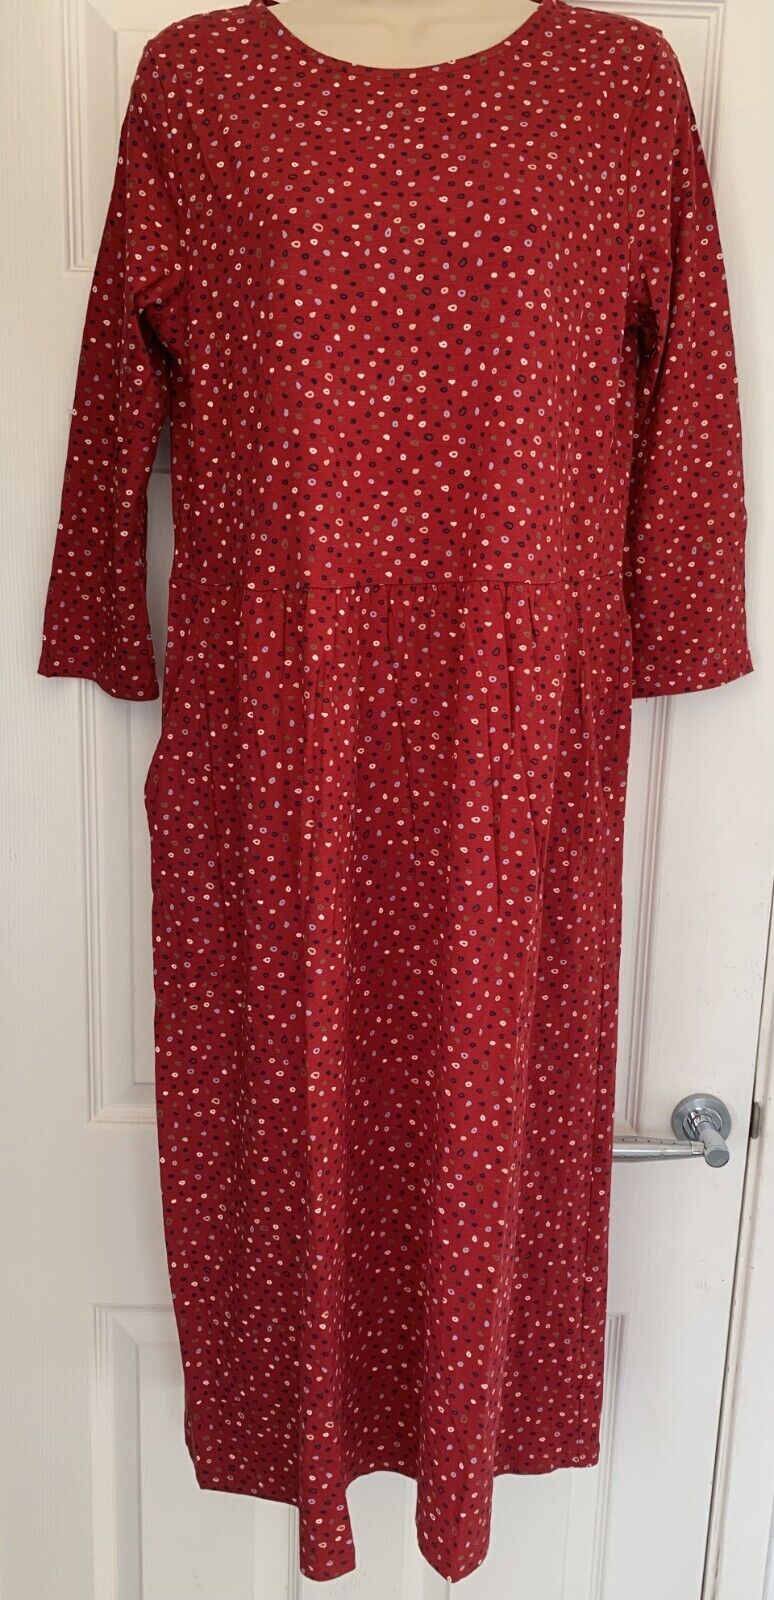 EX Seasalt Red Dotty Guelder Rose Dress Sizes 8 10 12 14 16 18 22 26/28 RRP £70